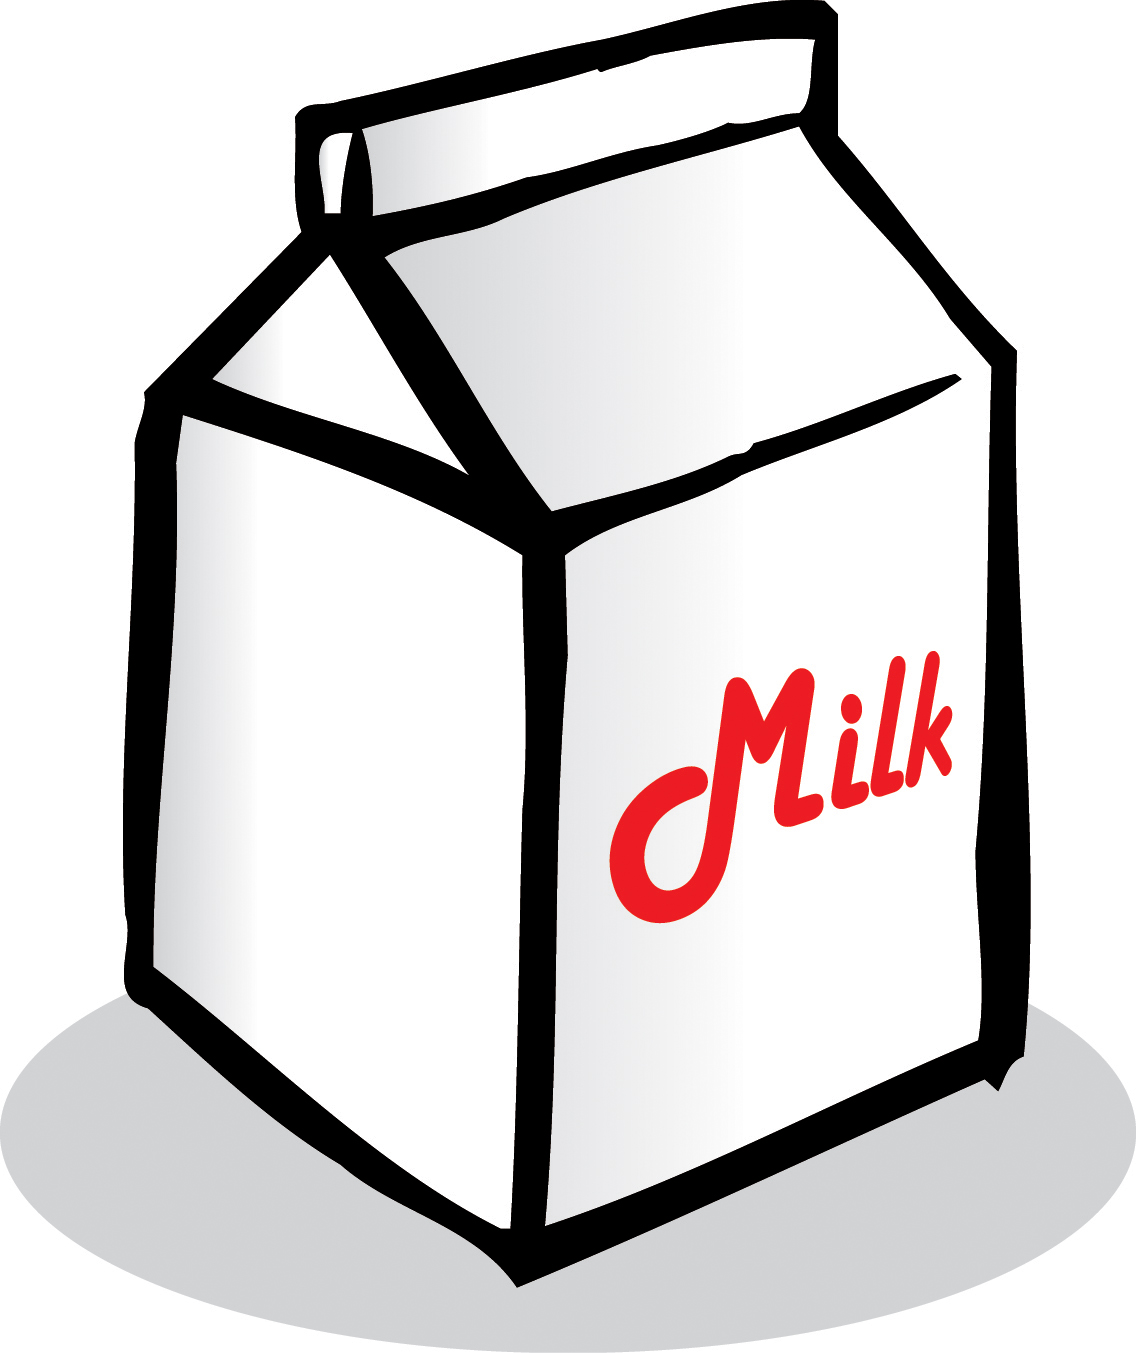 Cartoon Milk Carton - ClipArt Best